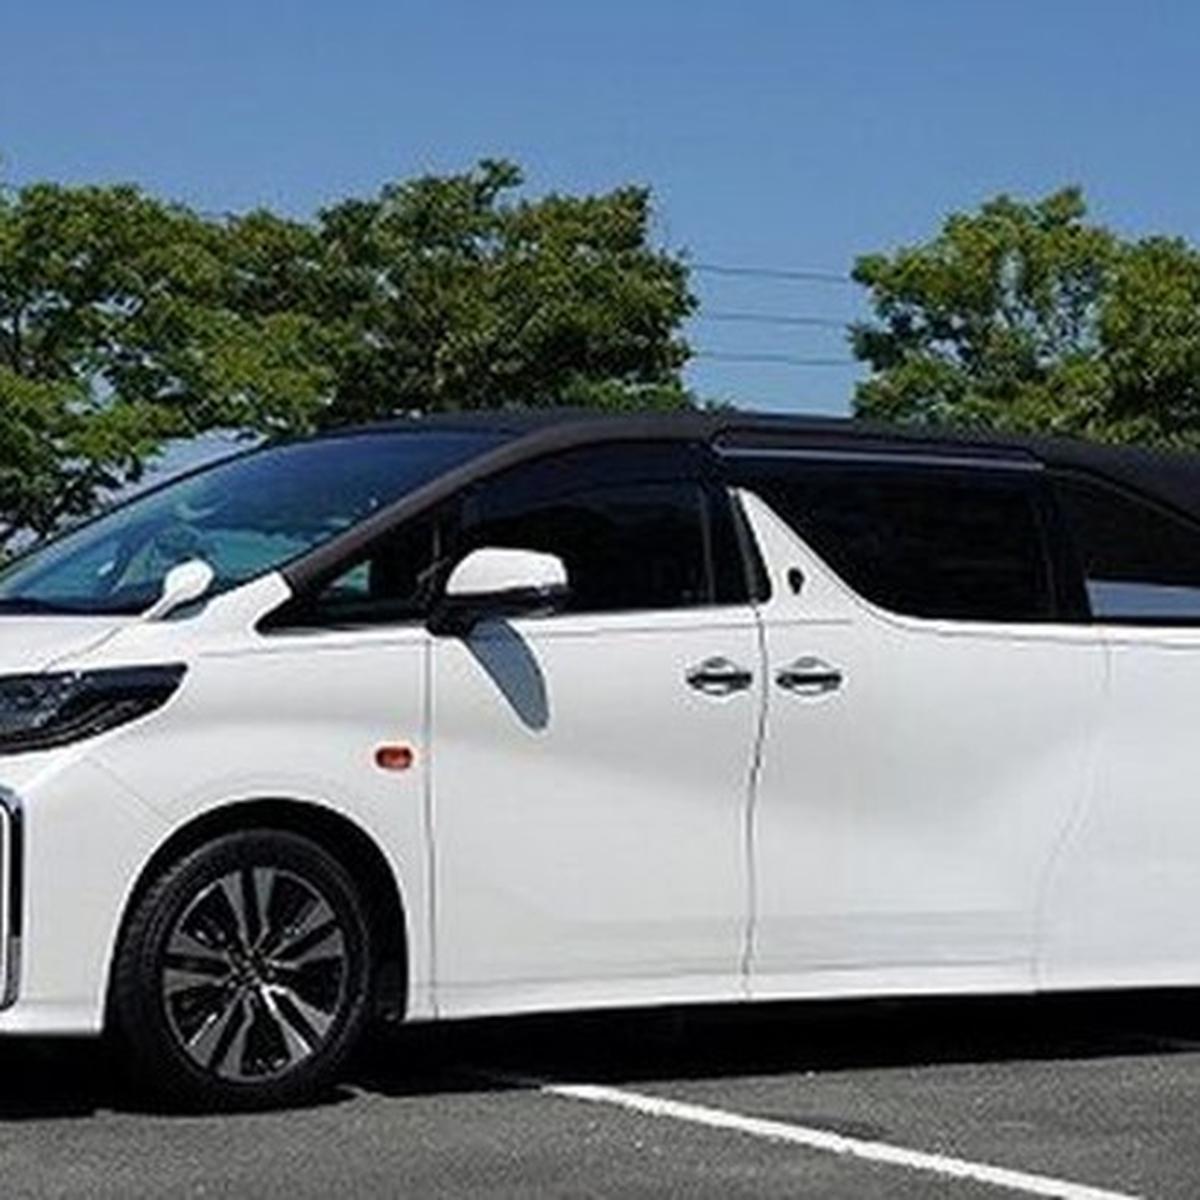 Begini Jadinya Jika Toyota Alphard Dijadikan Mobil Jenazah Otomotif Liputan6com